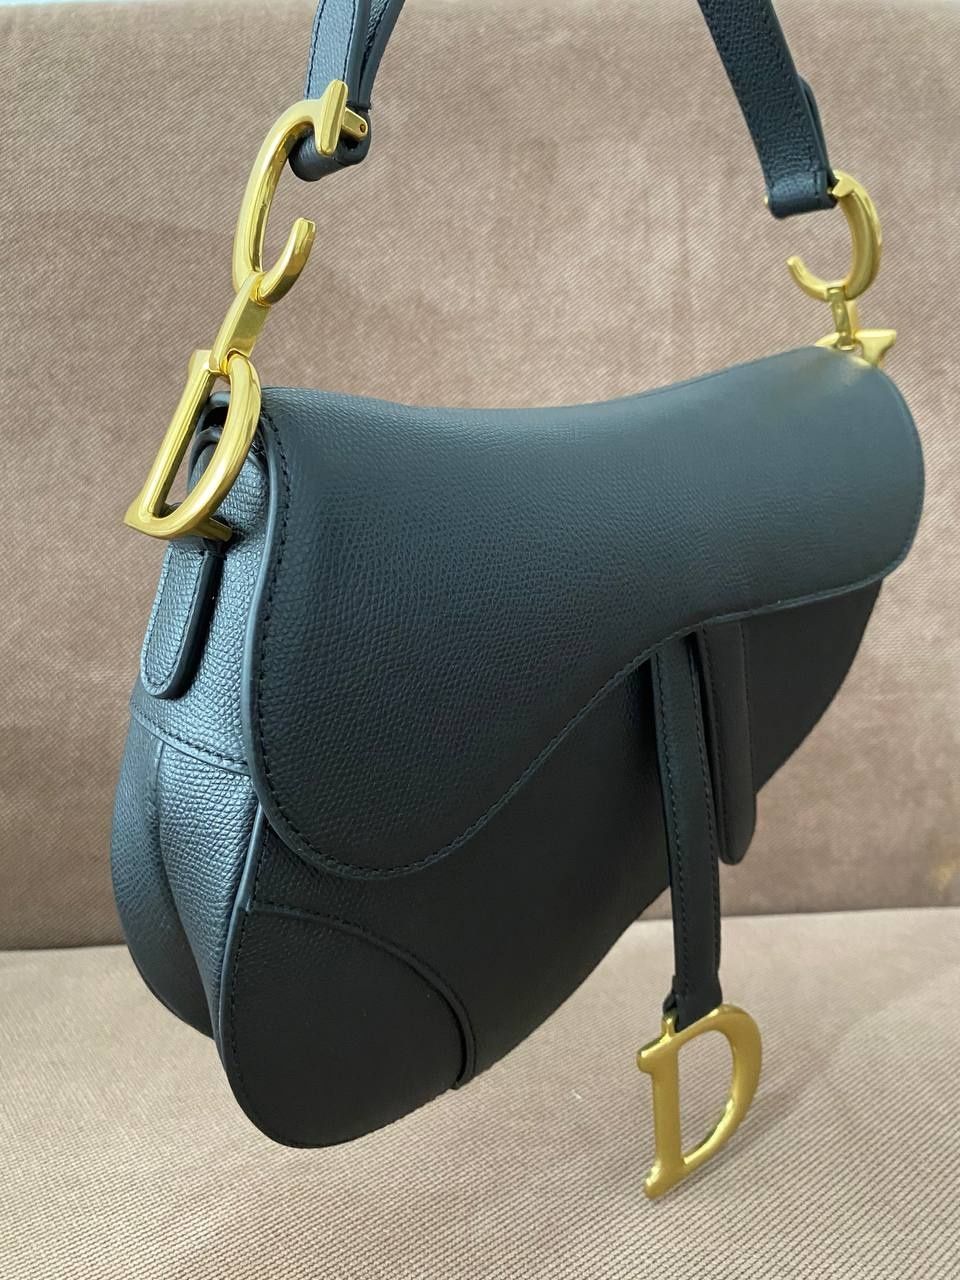 Dior saddle сумка christian dior saddle НОВЫЙ